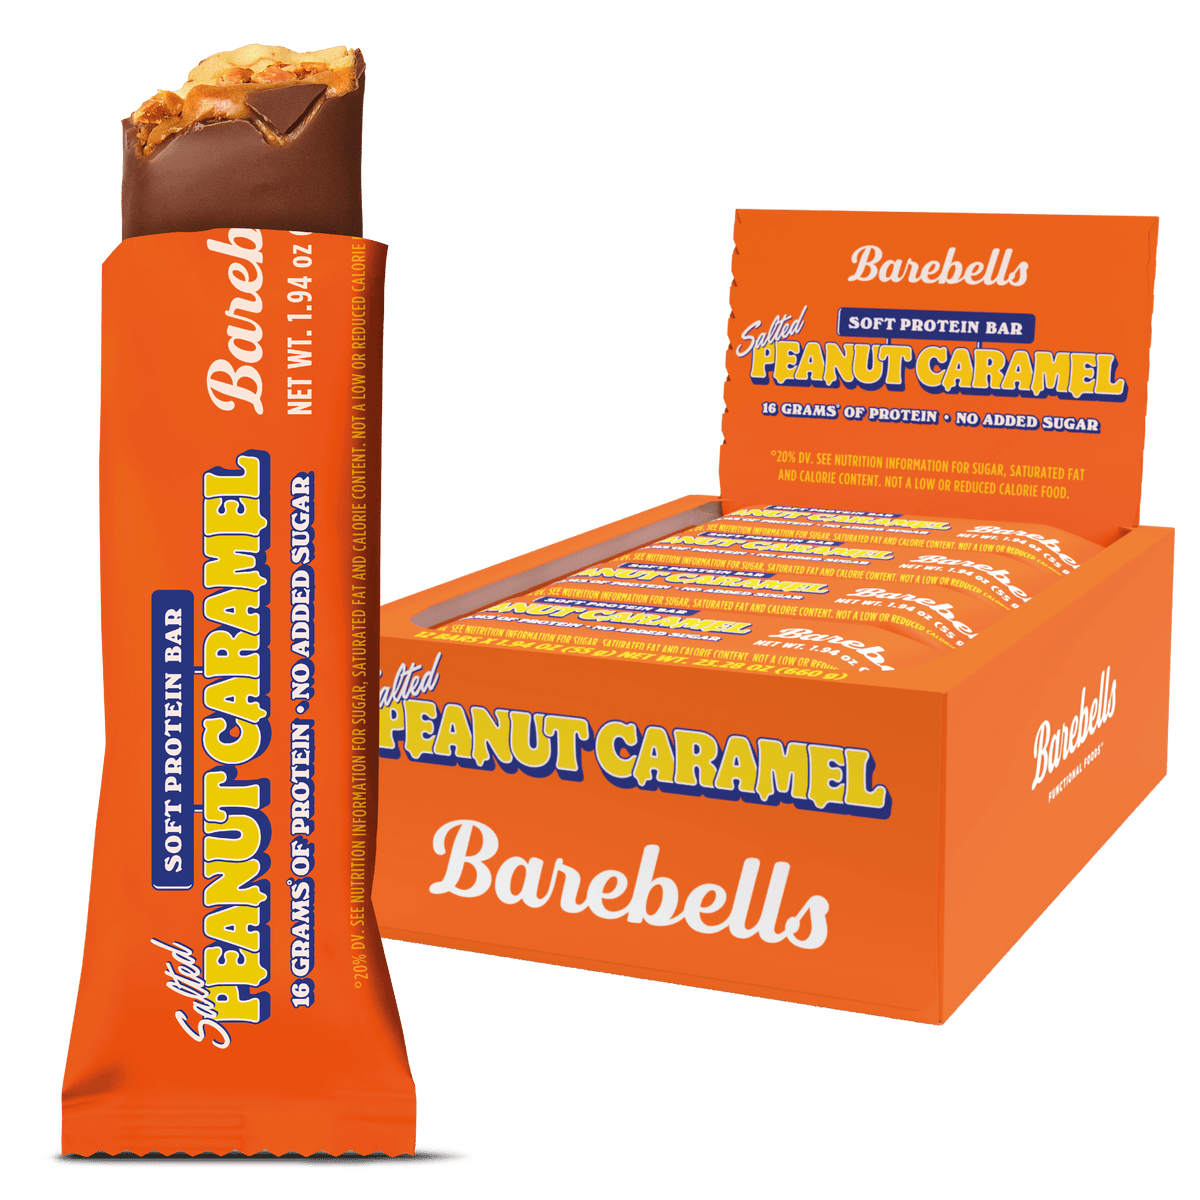 Barebells - Soft Protein Bar - Box 12